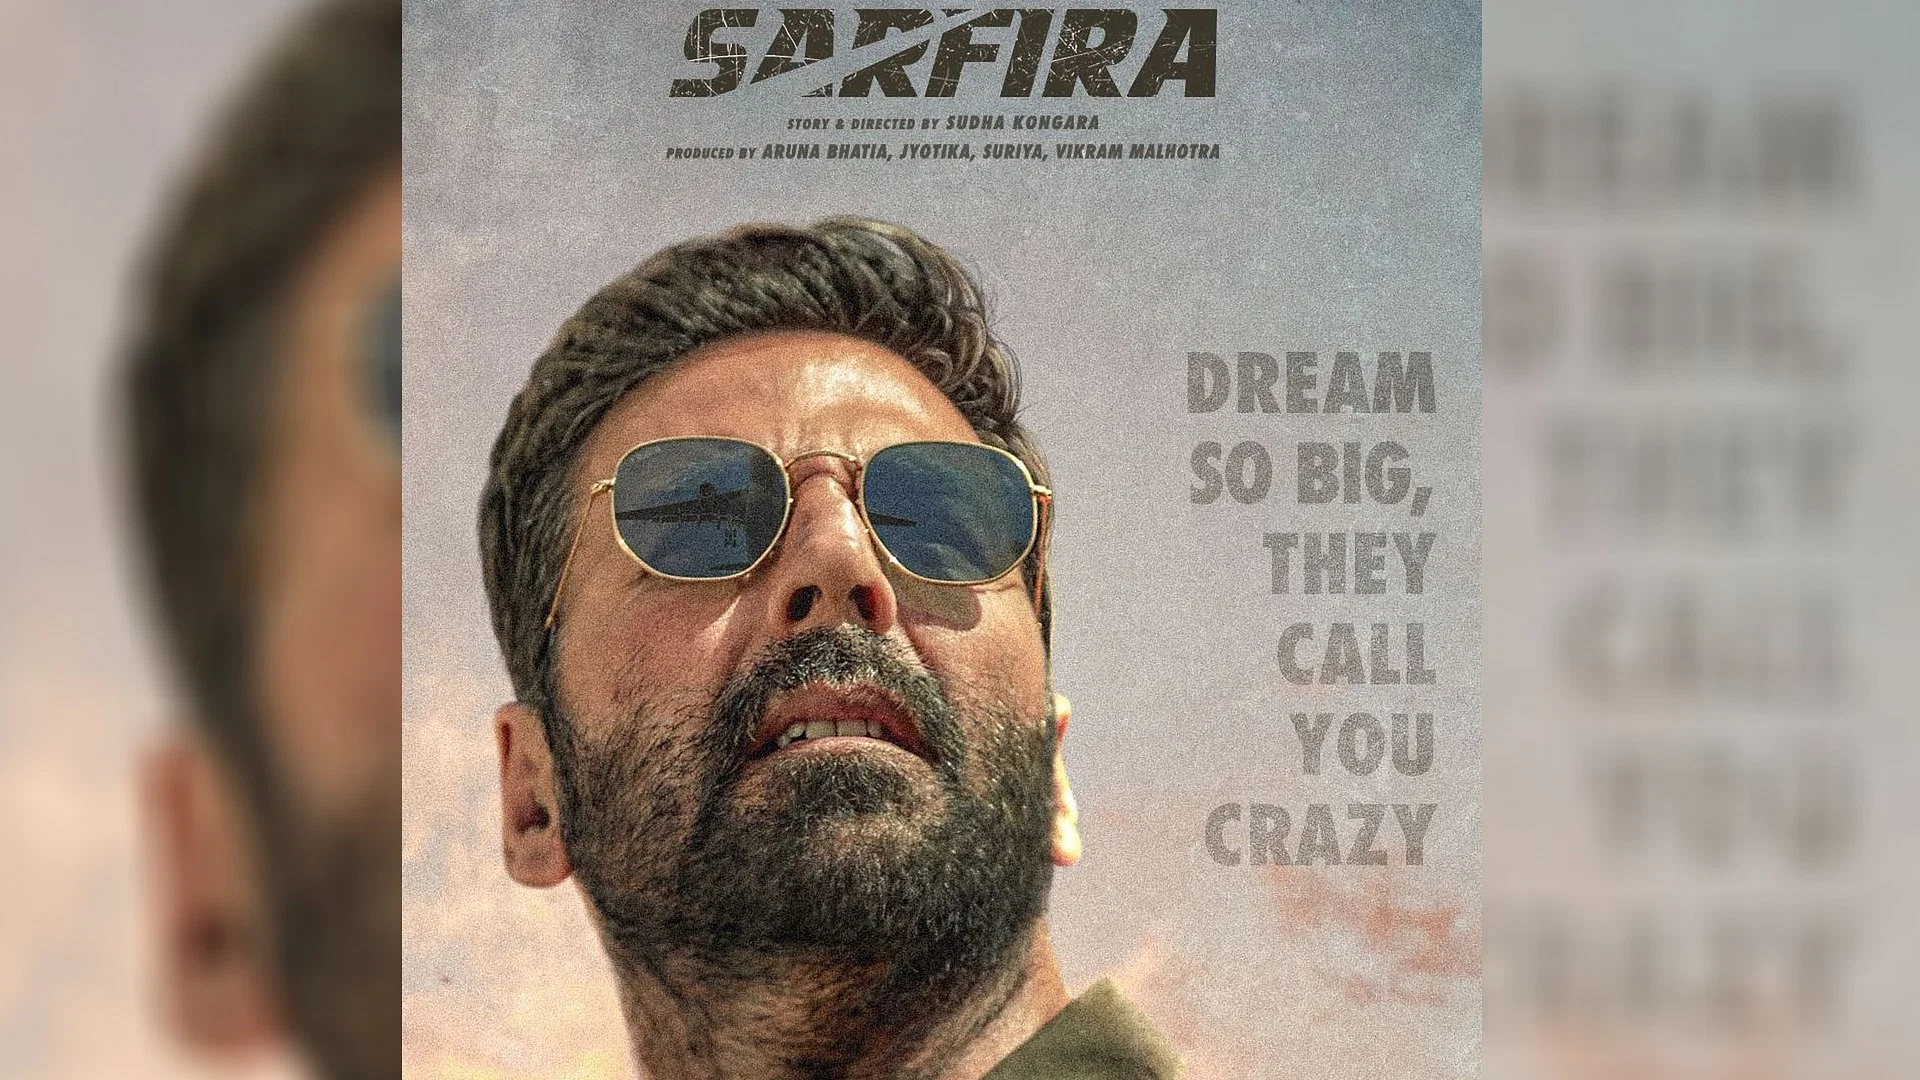 Sarfira Trailer Review: Akshay Kumar’s Promising Venture Into Soorarai Pottru’s Remake – All You Need to Know